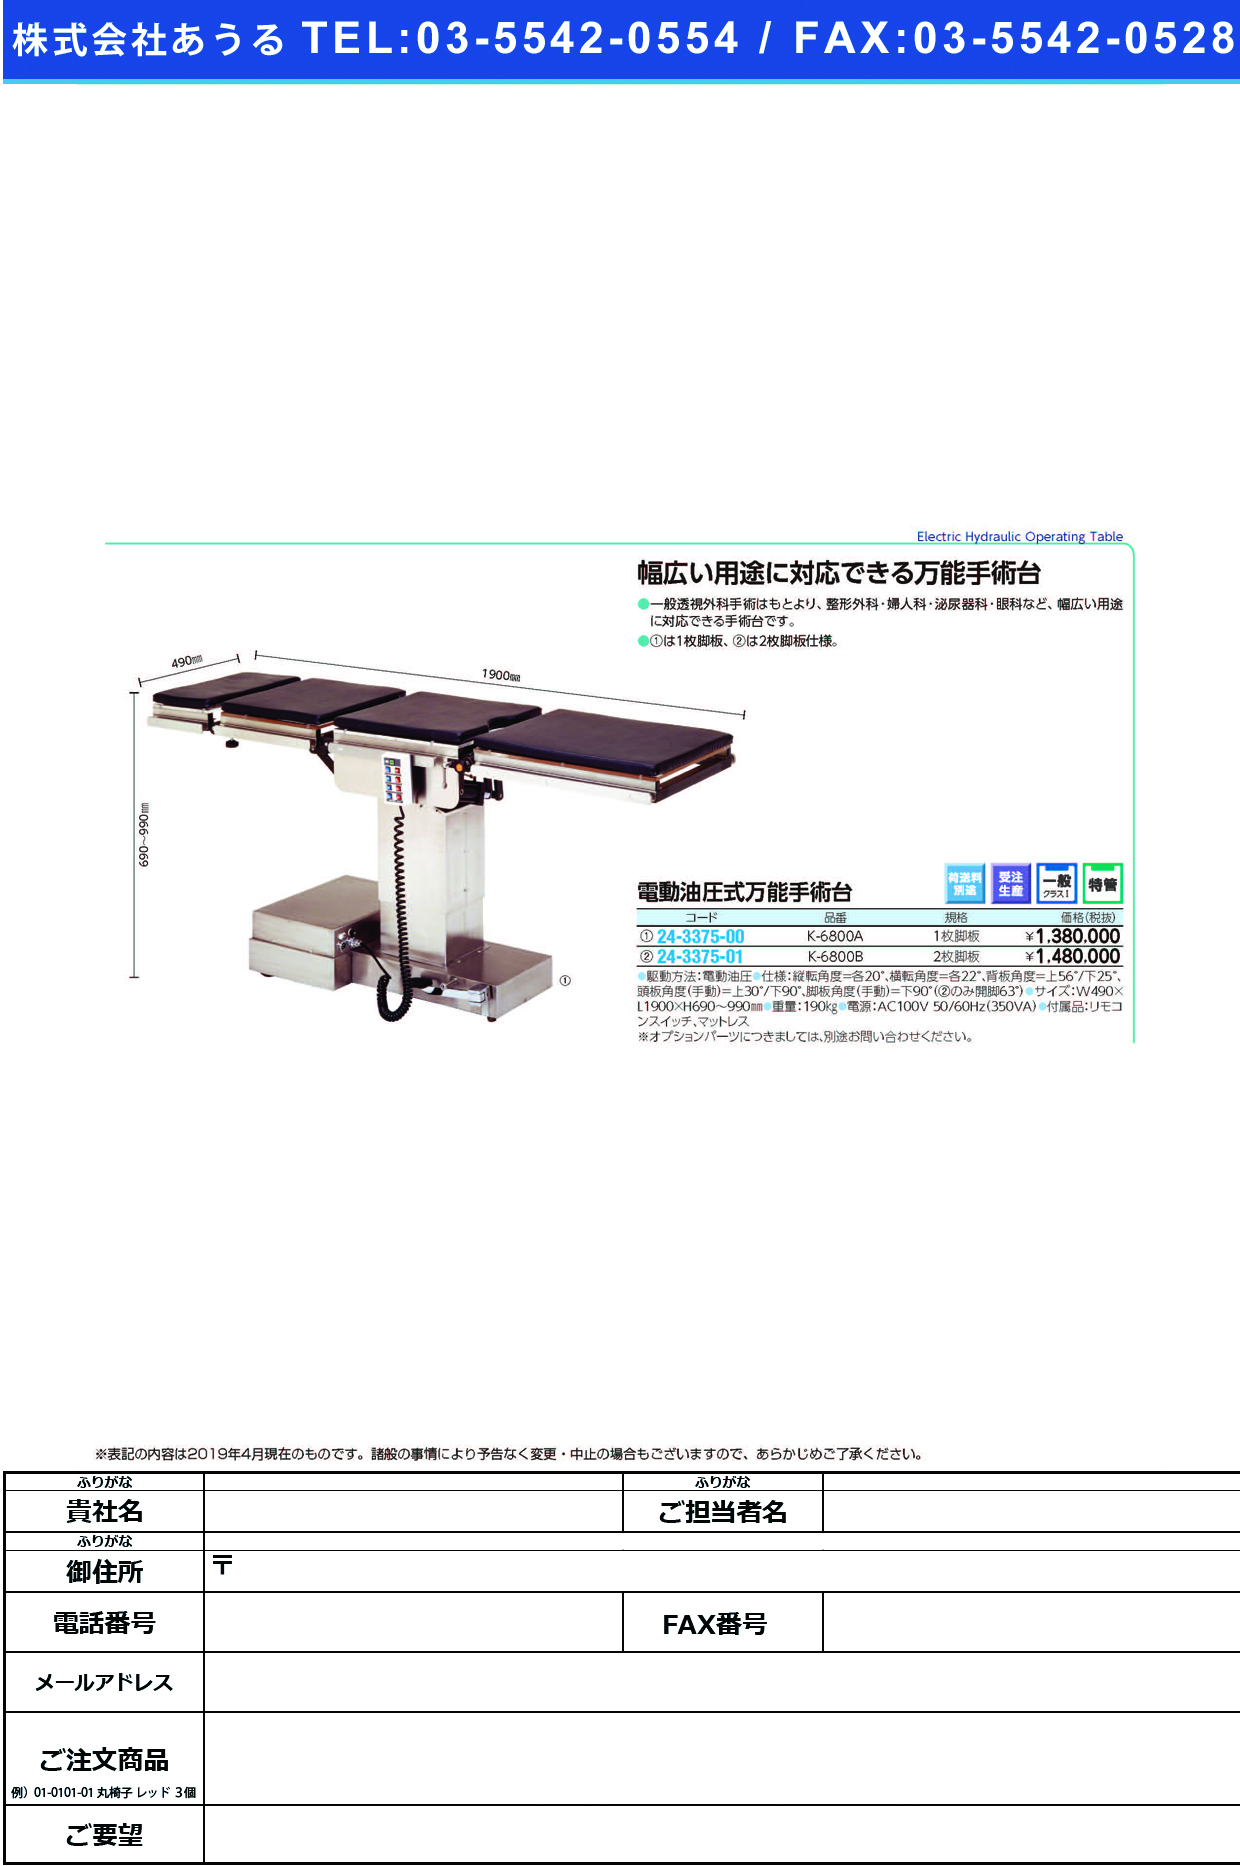 (24-3375-00)外科用手術台 K-6800A ｹﾞｶﾖｳｼｭｼﾞｭﾂﾀﾞｲ【1台単位】【2019年カタログ商品】